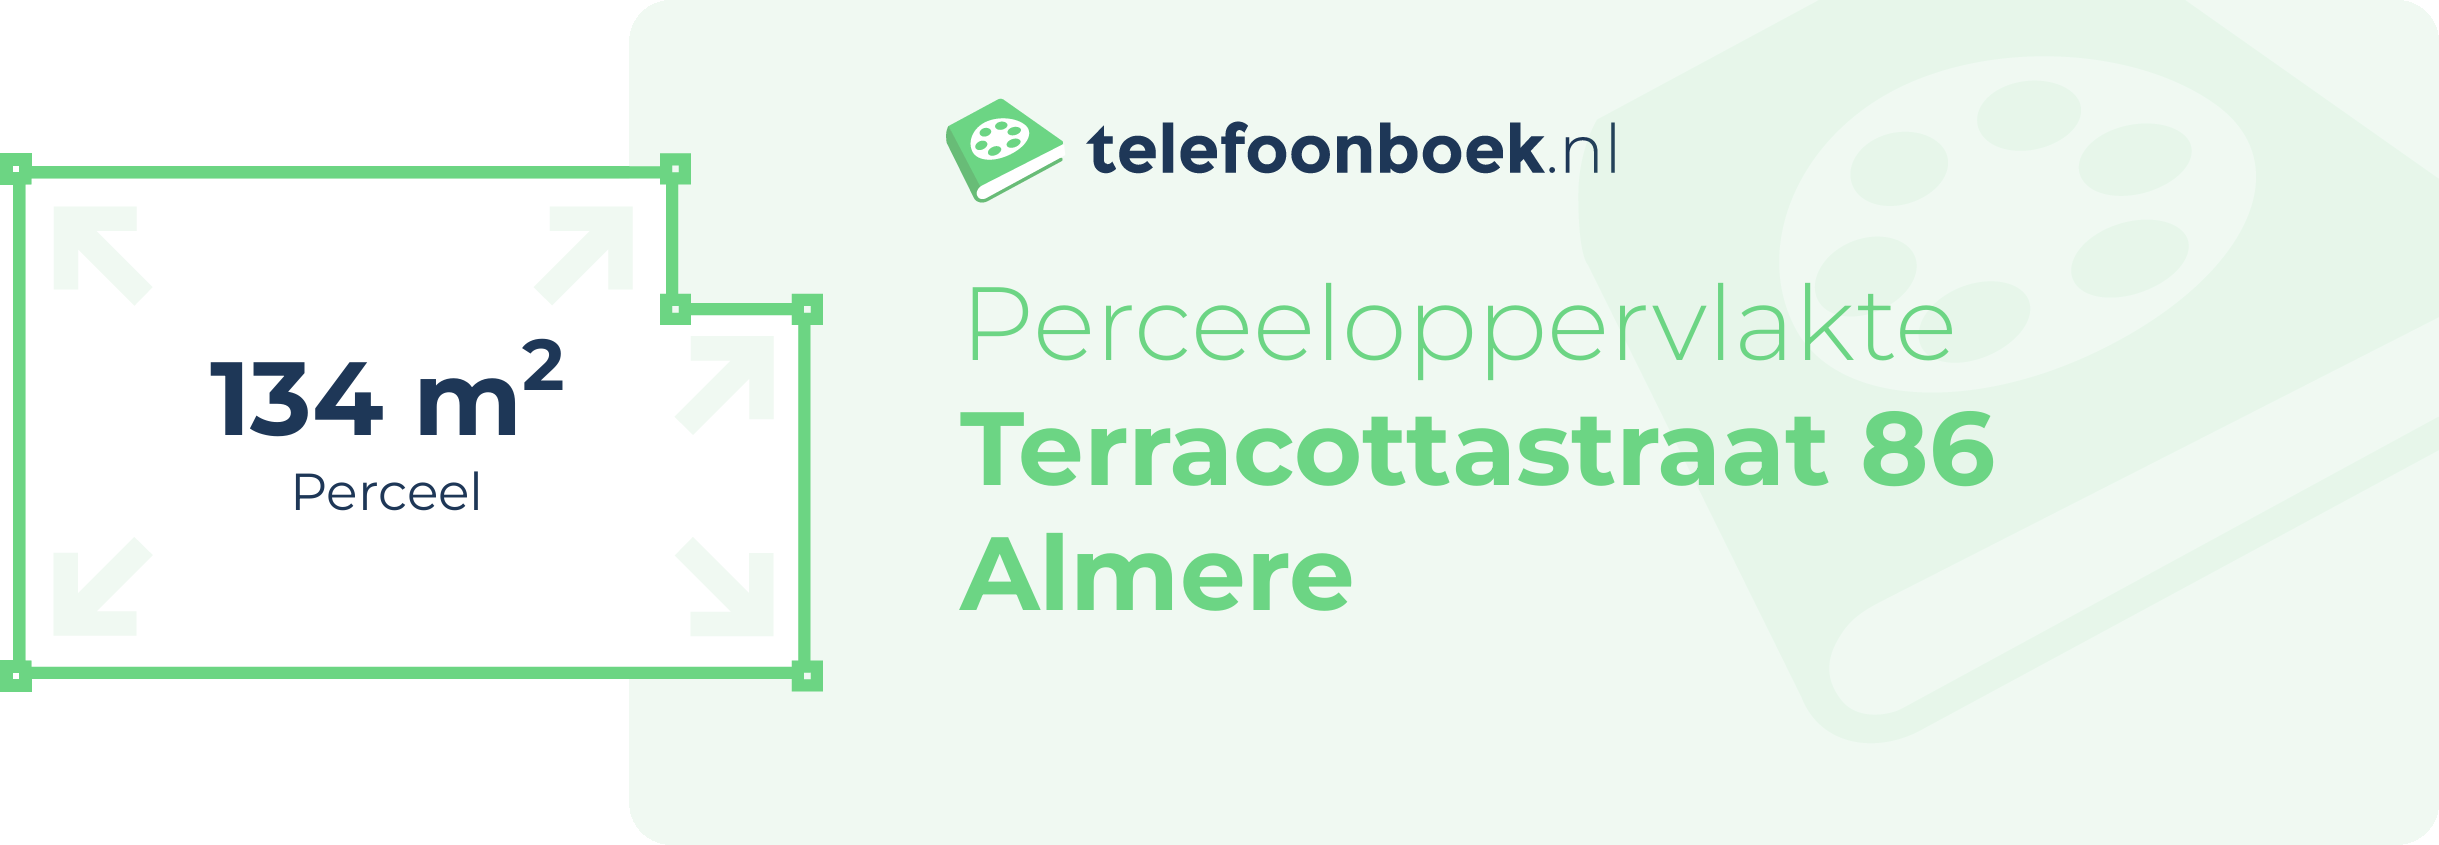 Perceeloppervlakte Terracottastraat 86 Almere